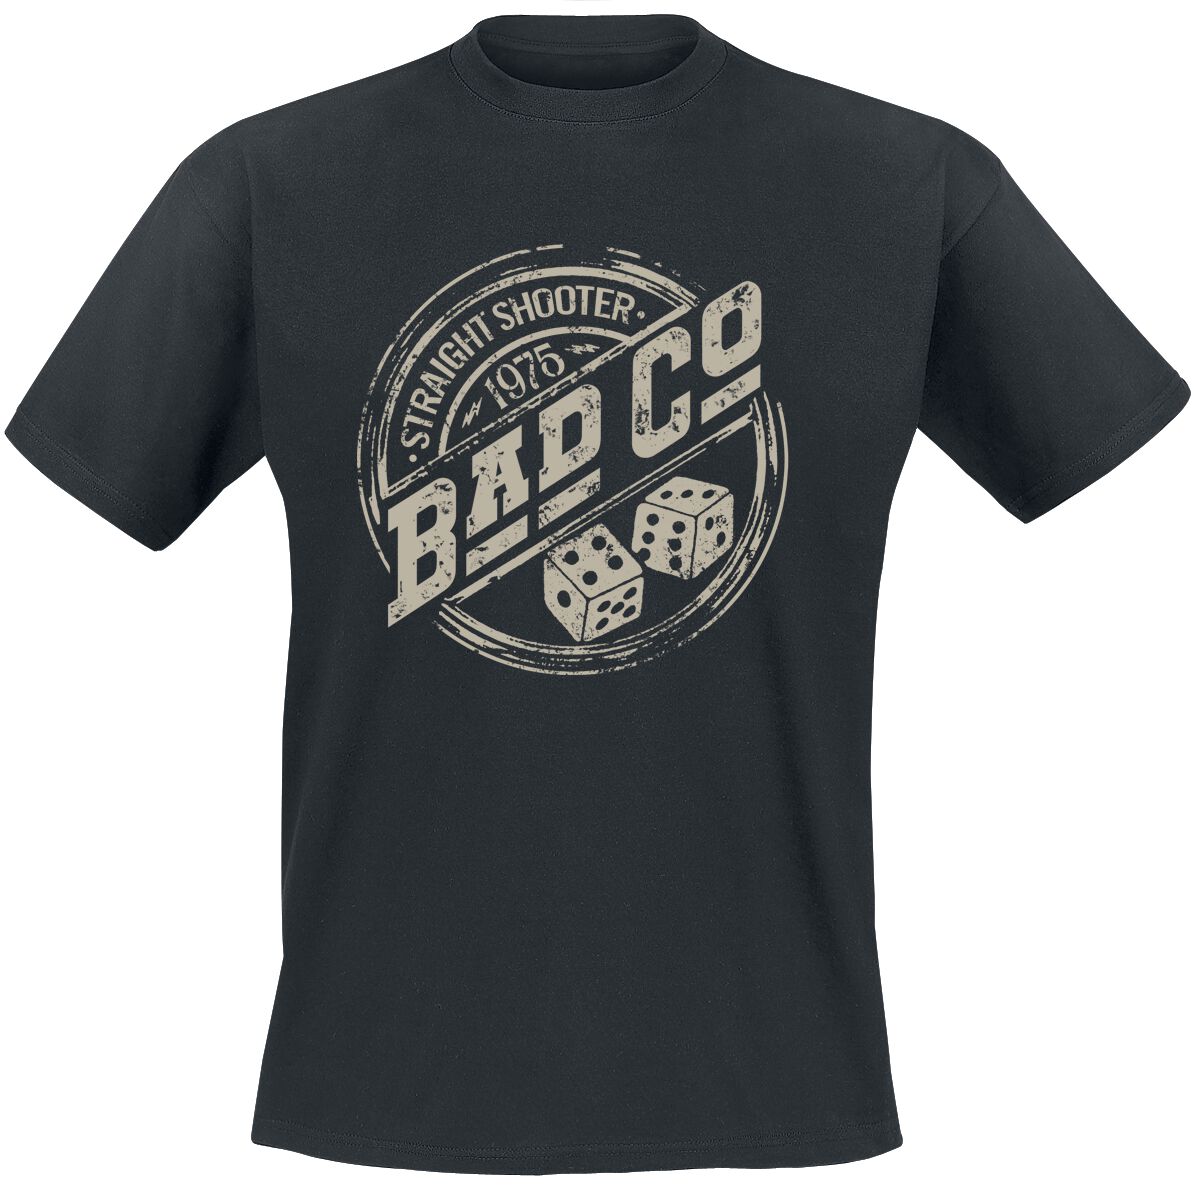 Bad Company Straight Shooter T-Shirt schwarz in XL